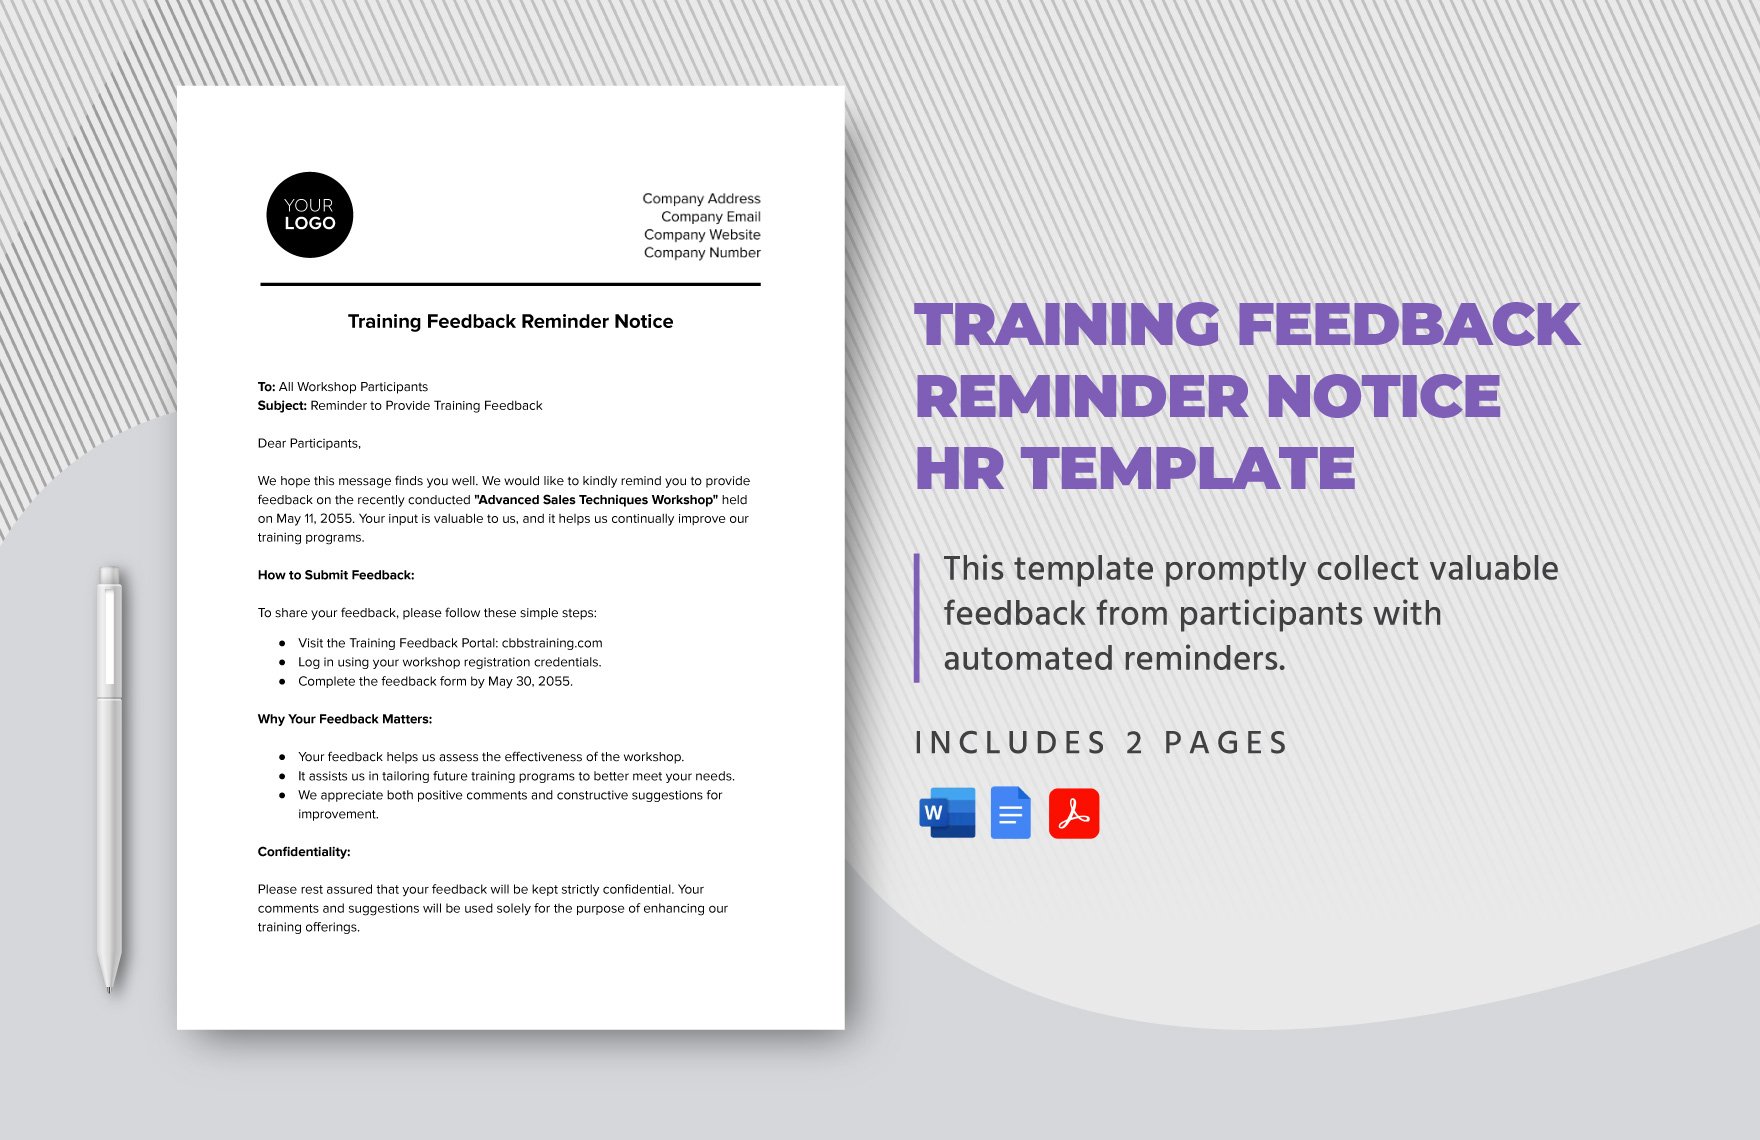 Training Feedback Reminder Notice HR Template in Word, Google Docs, PDF